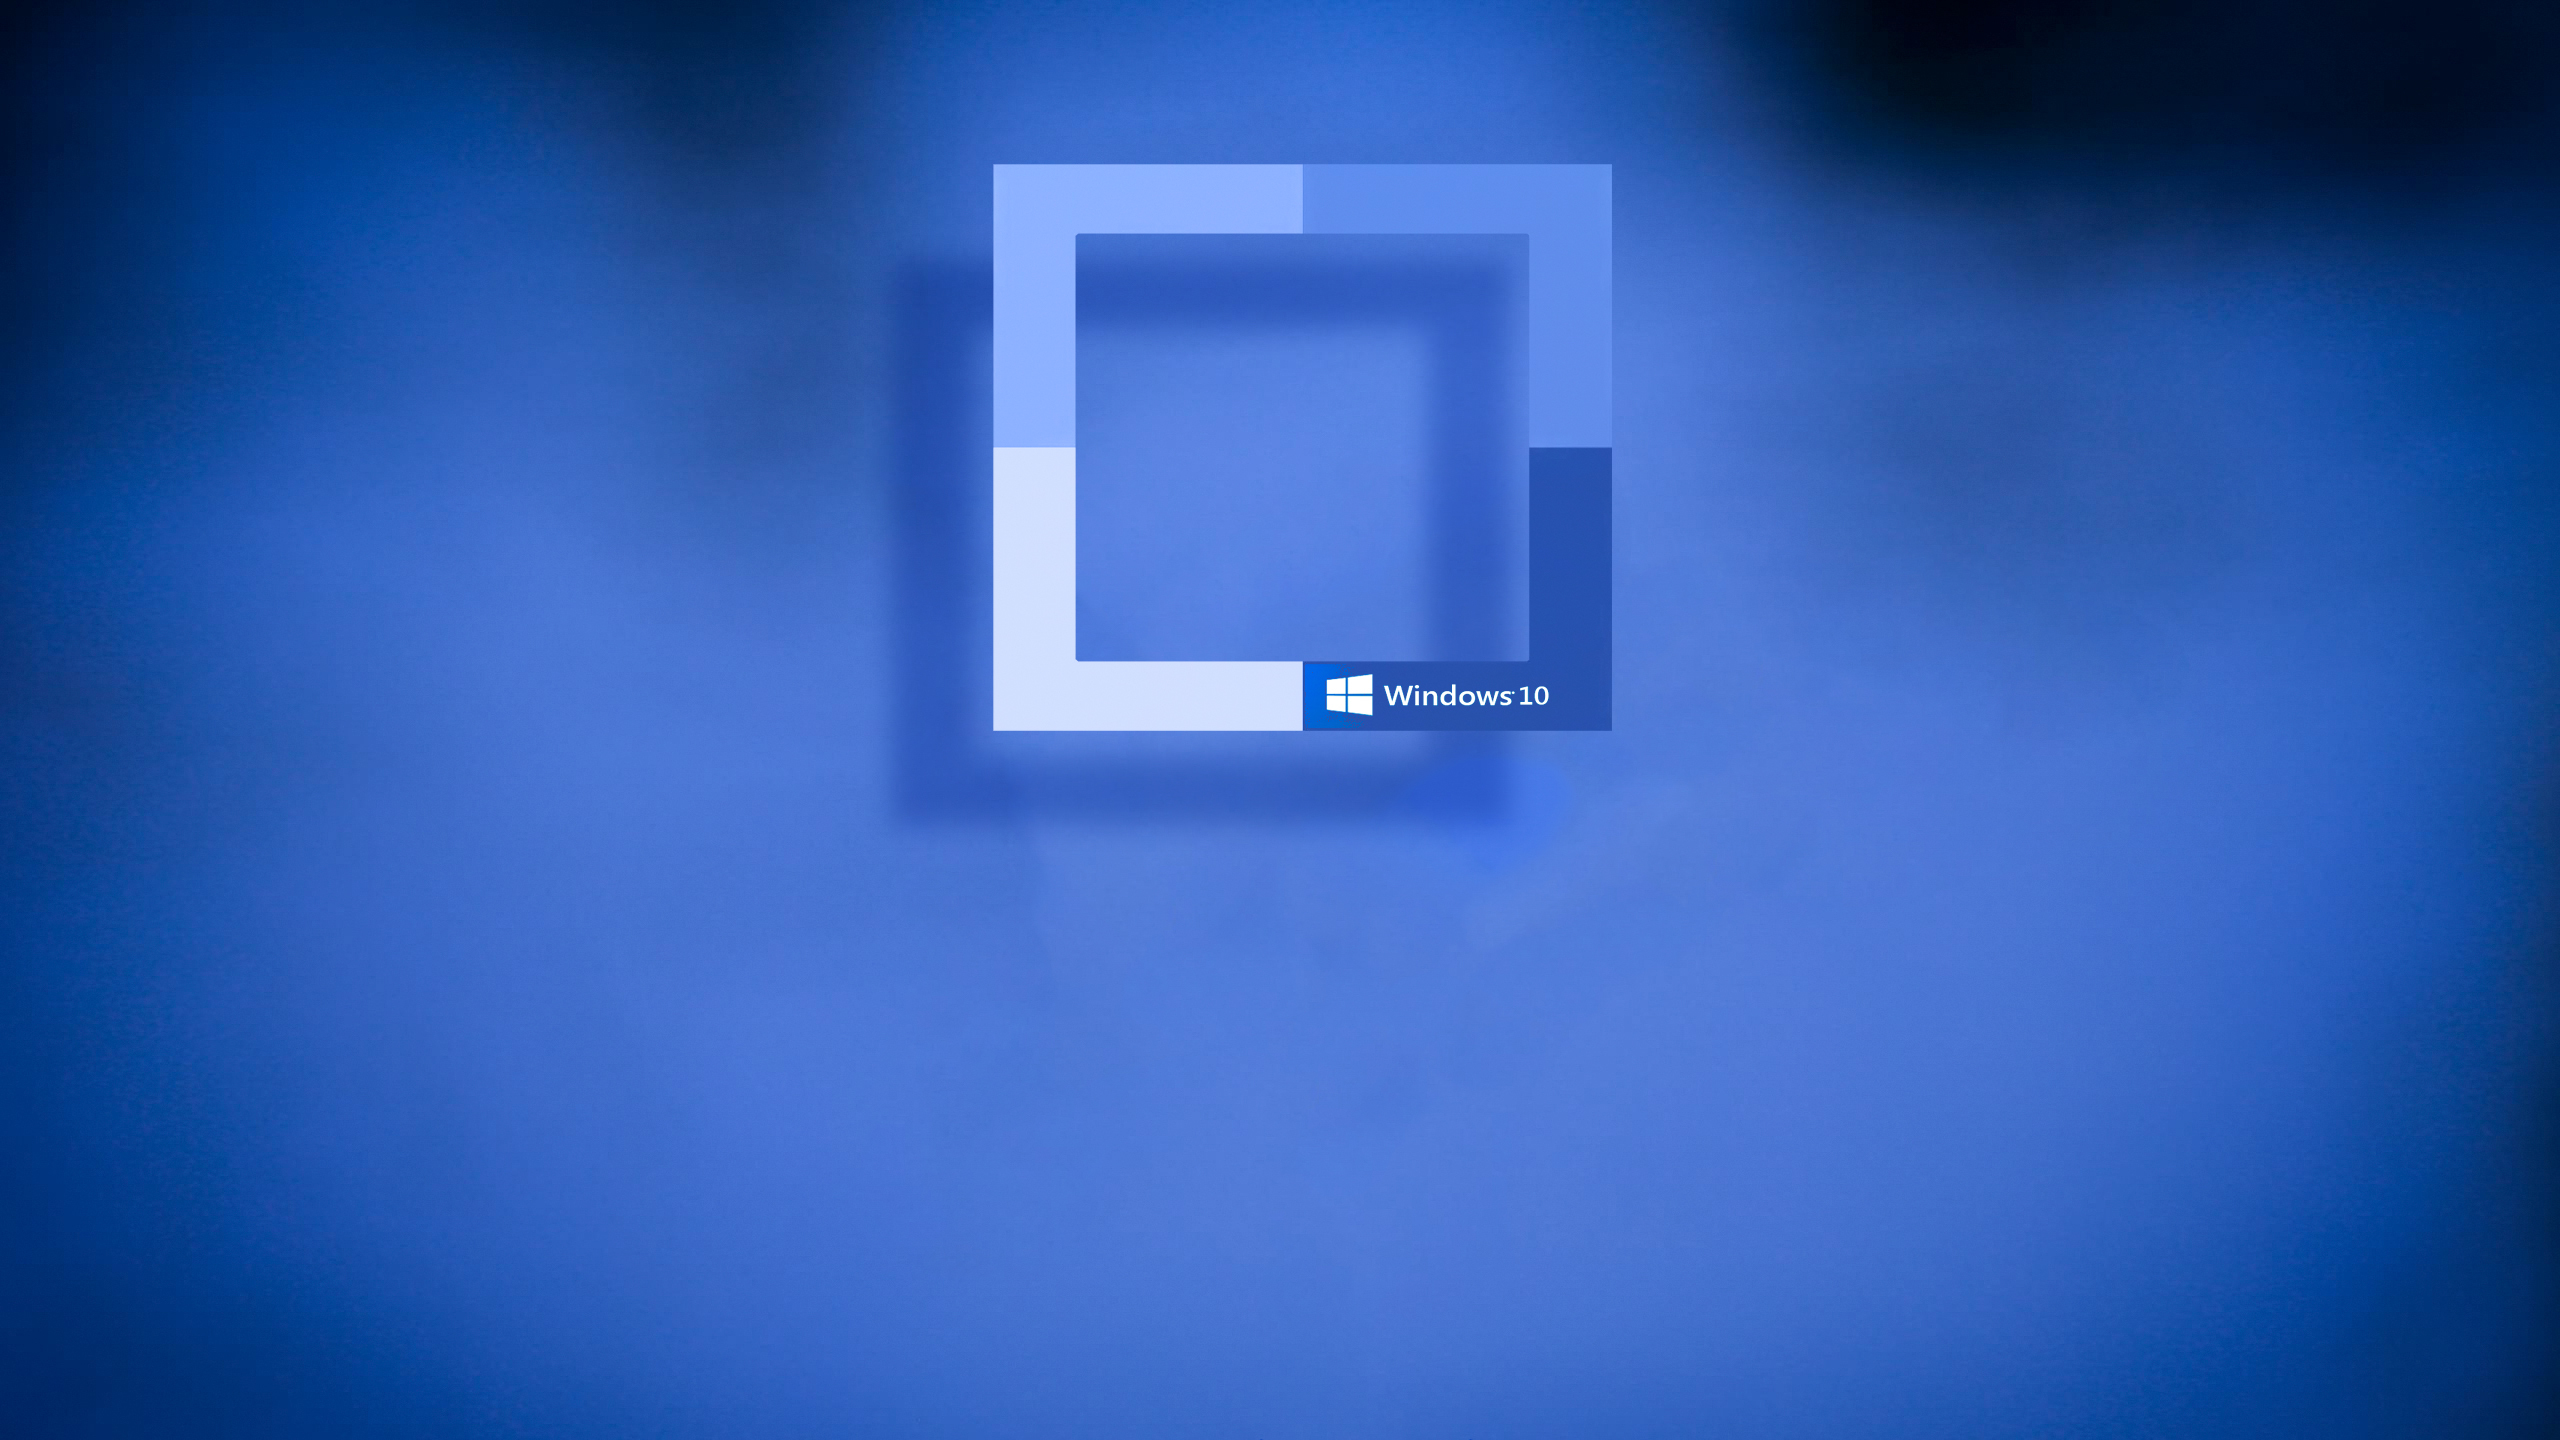 hd desktop wallpapers for windows 10,blue,text,electric blue,cobalt blue,azure